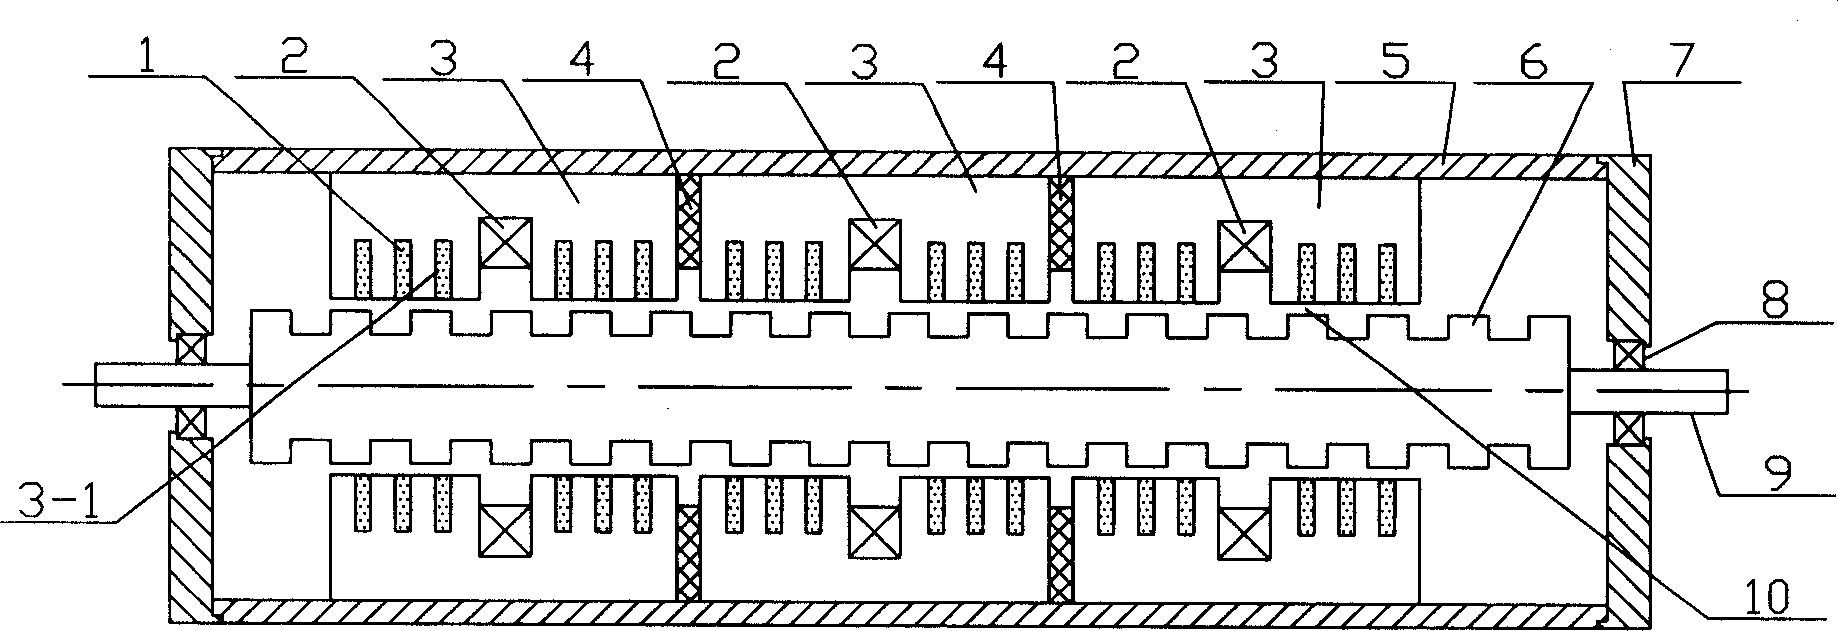 Columnar linear motor in permanent magnet reluctance type